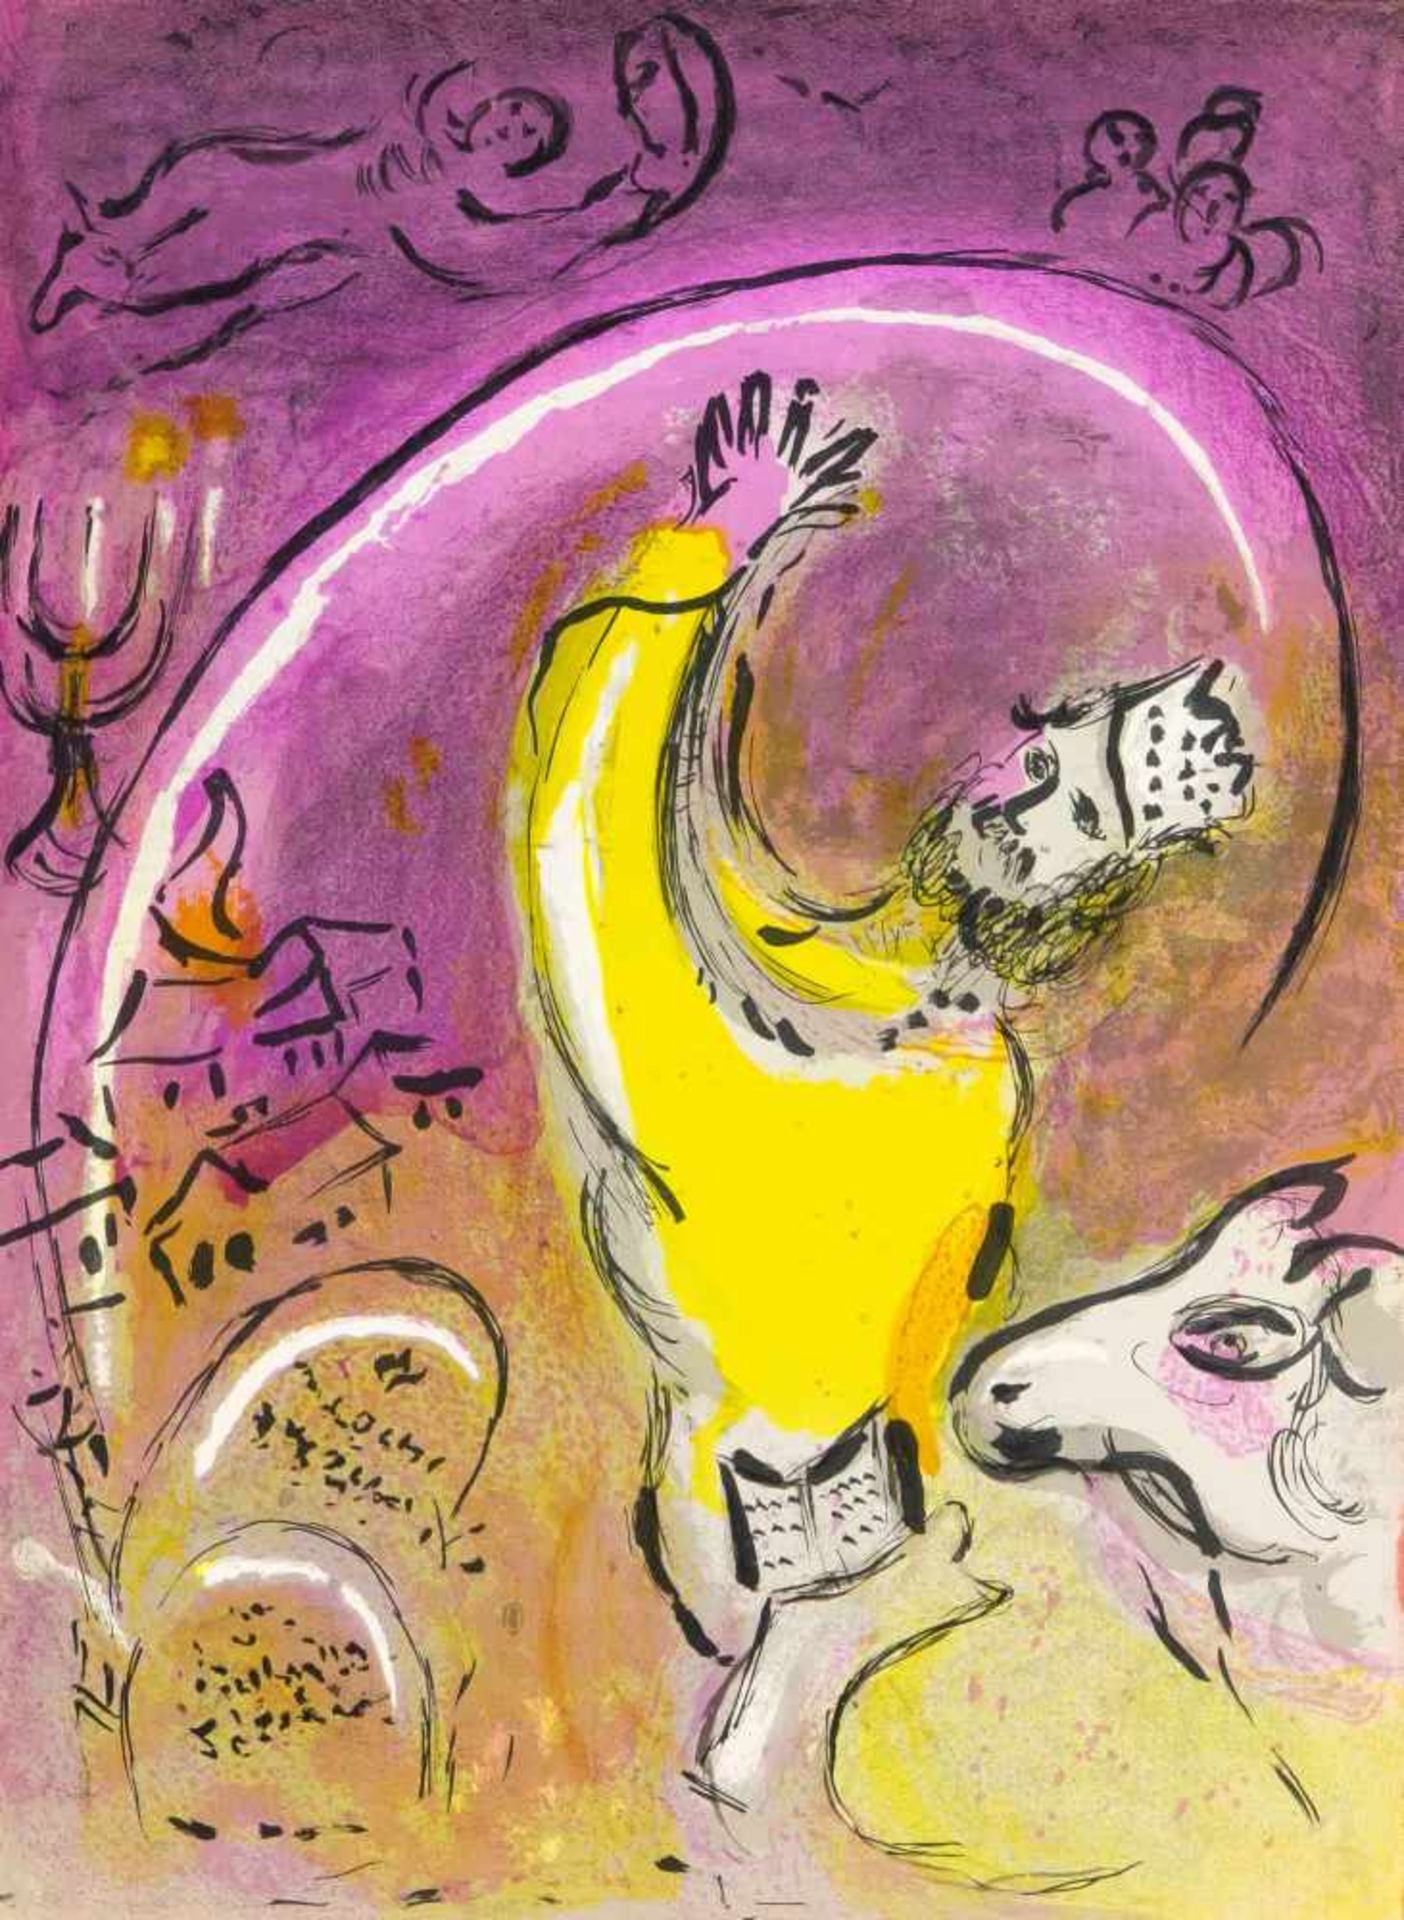 Marc Chagall (1887-1985), zwei Farblithographien, "Salomon". Farblithographie, 1956, WVZ